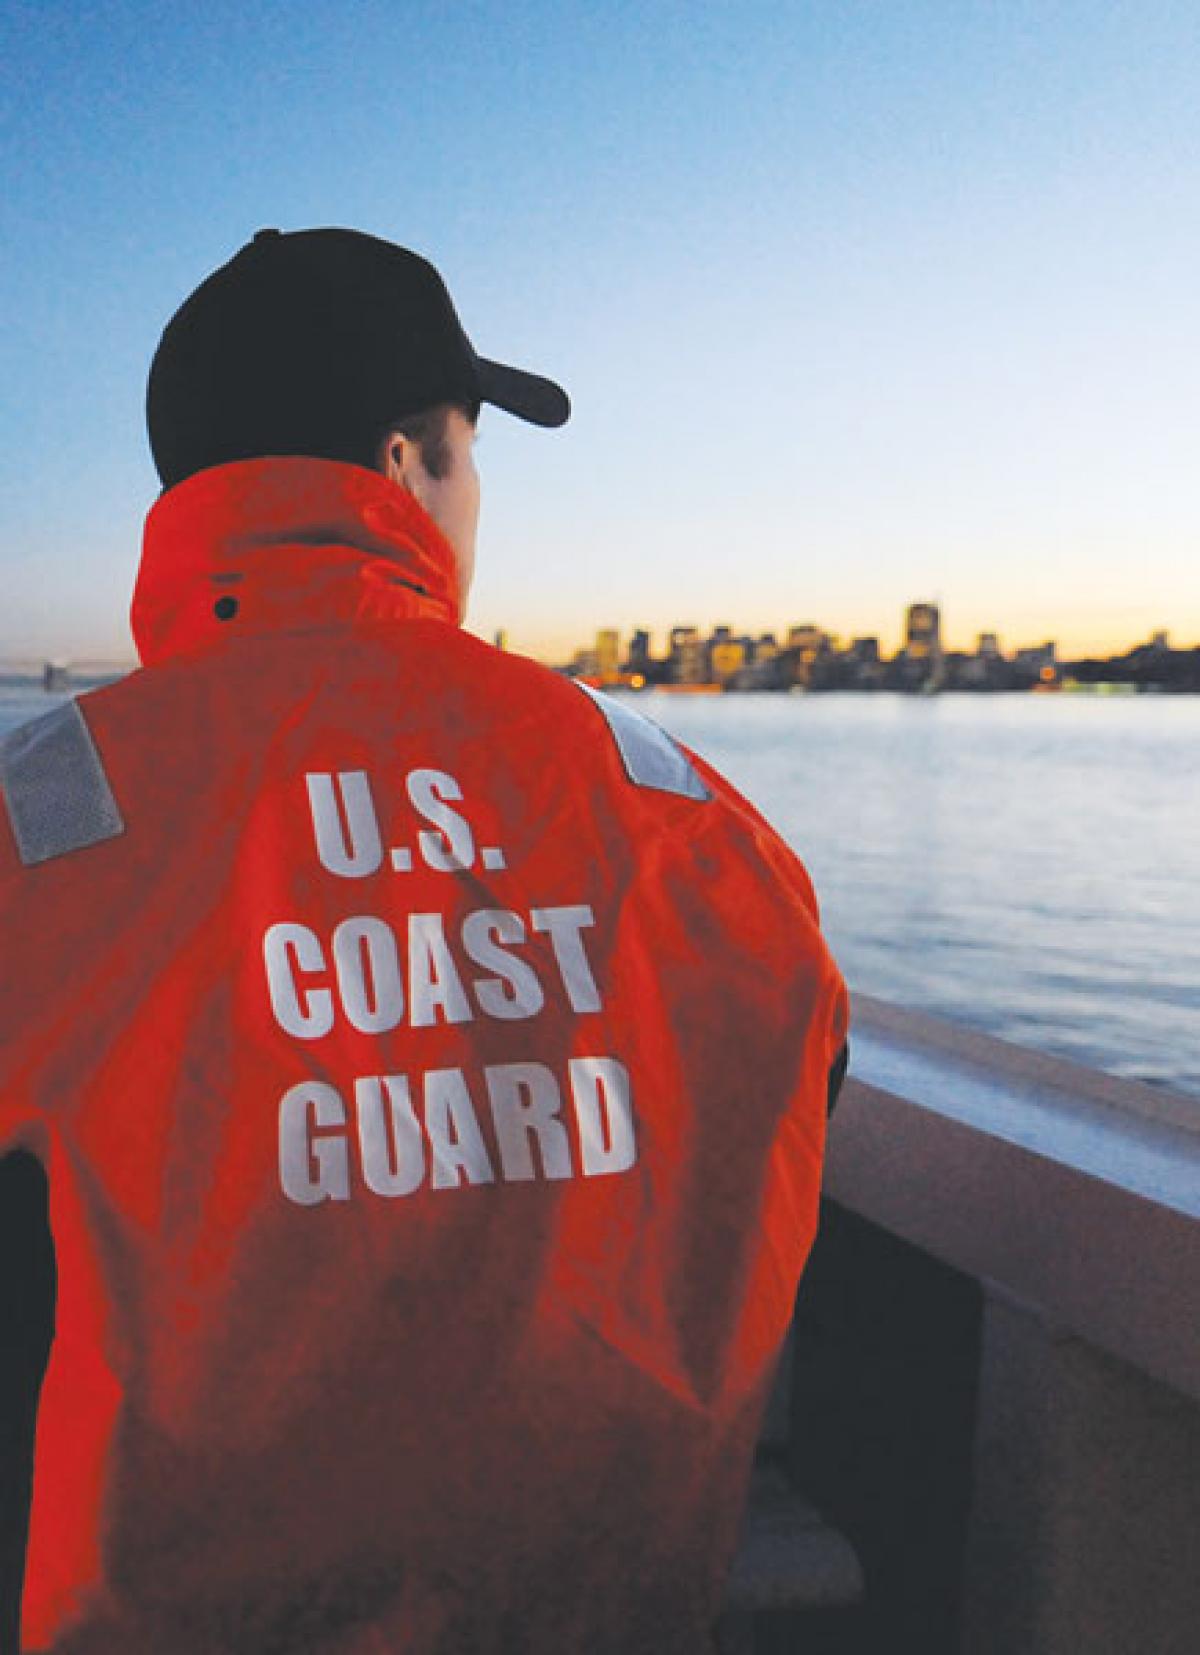 U.S. Coast Guard (Patrick Kelley)